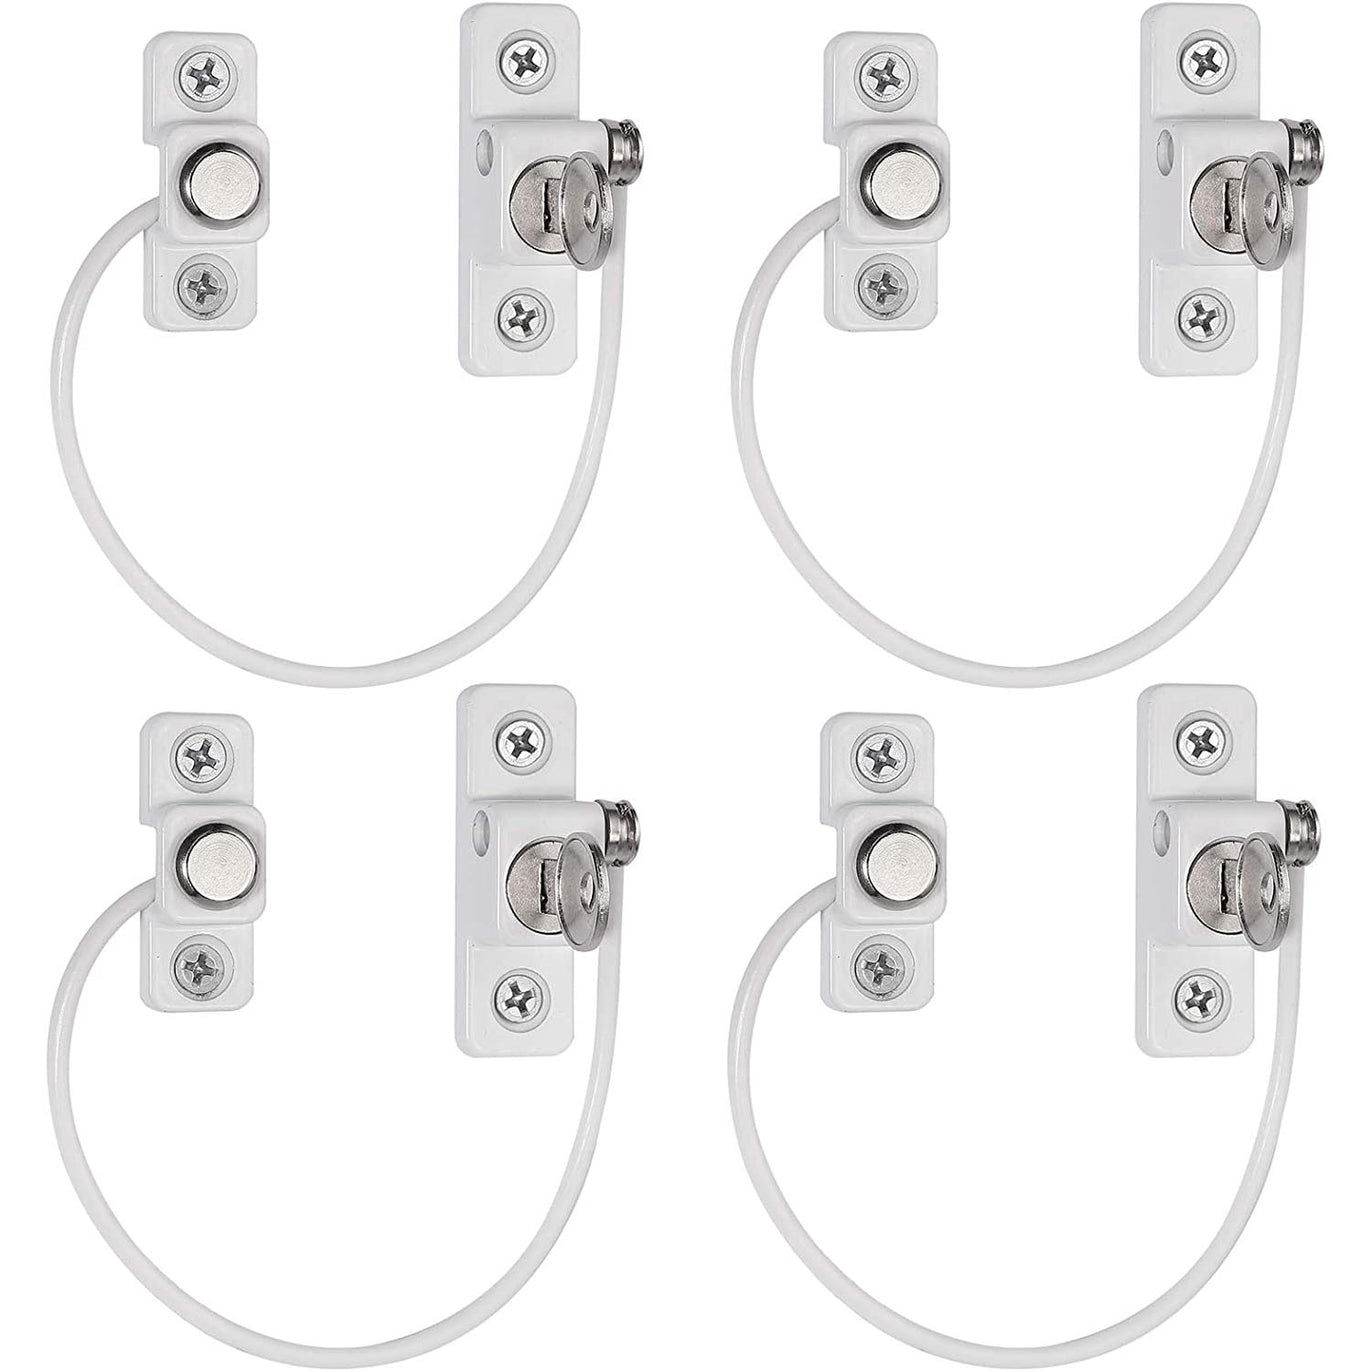 eSynic Popular 4pcs Window Restrictor Locks-White